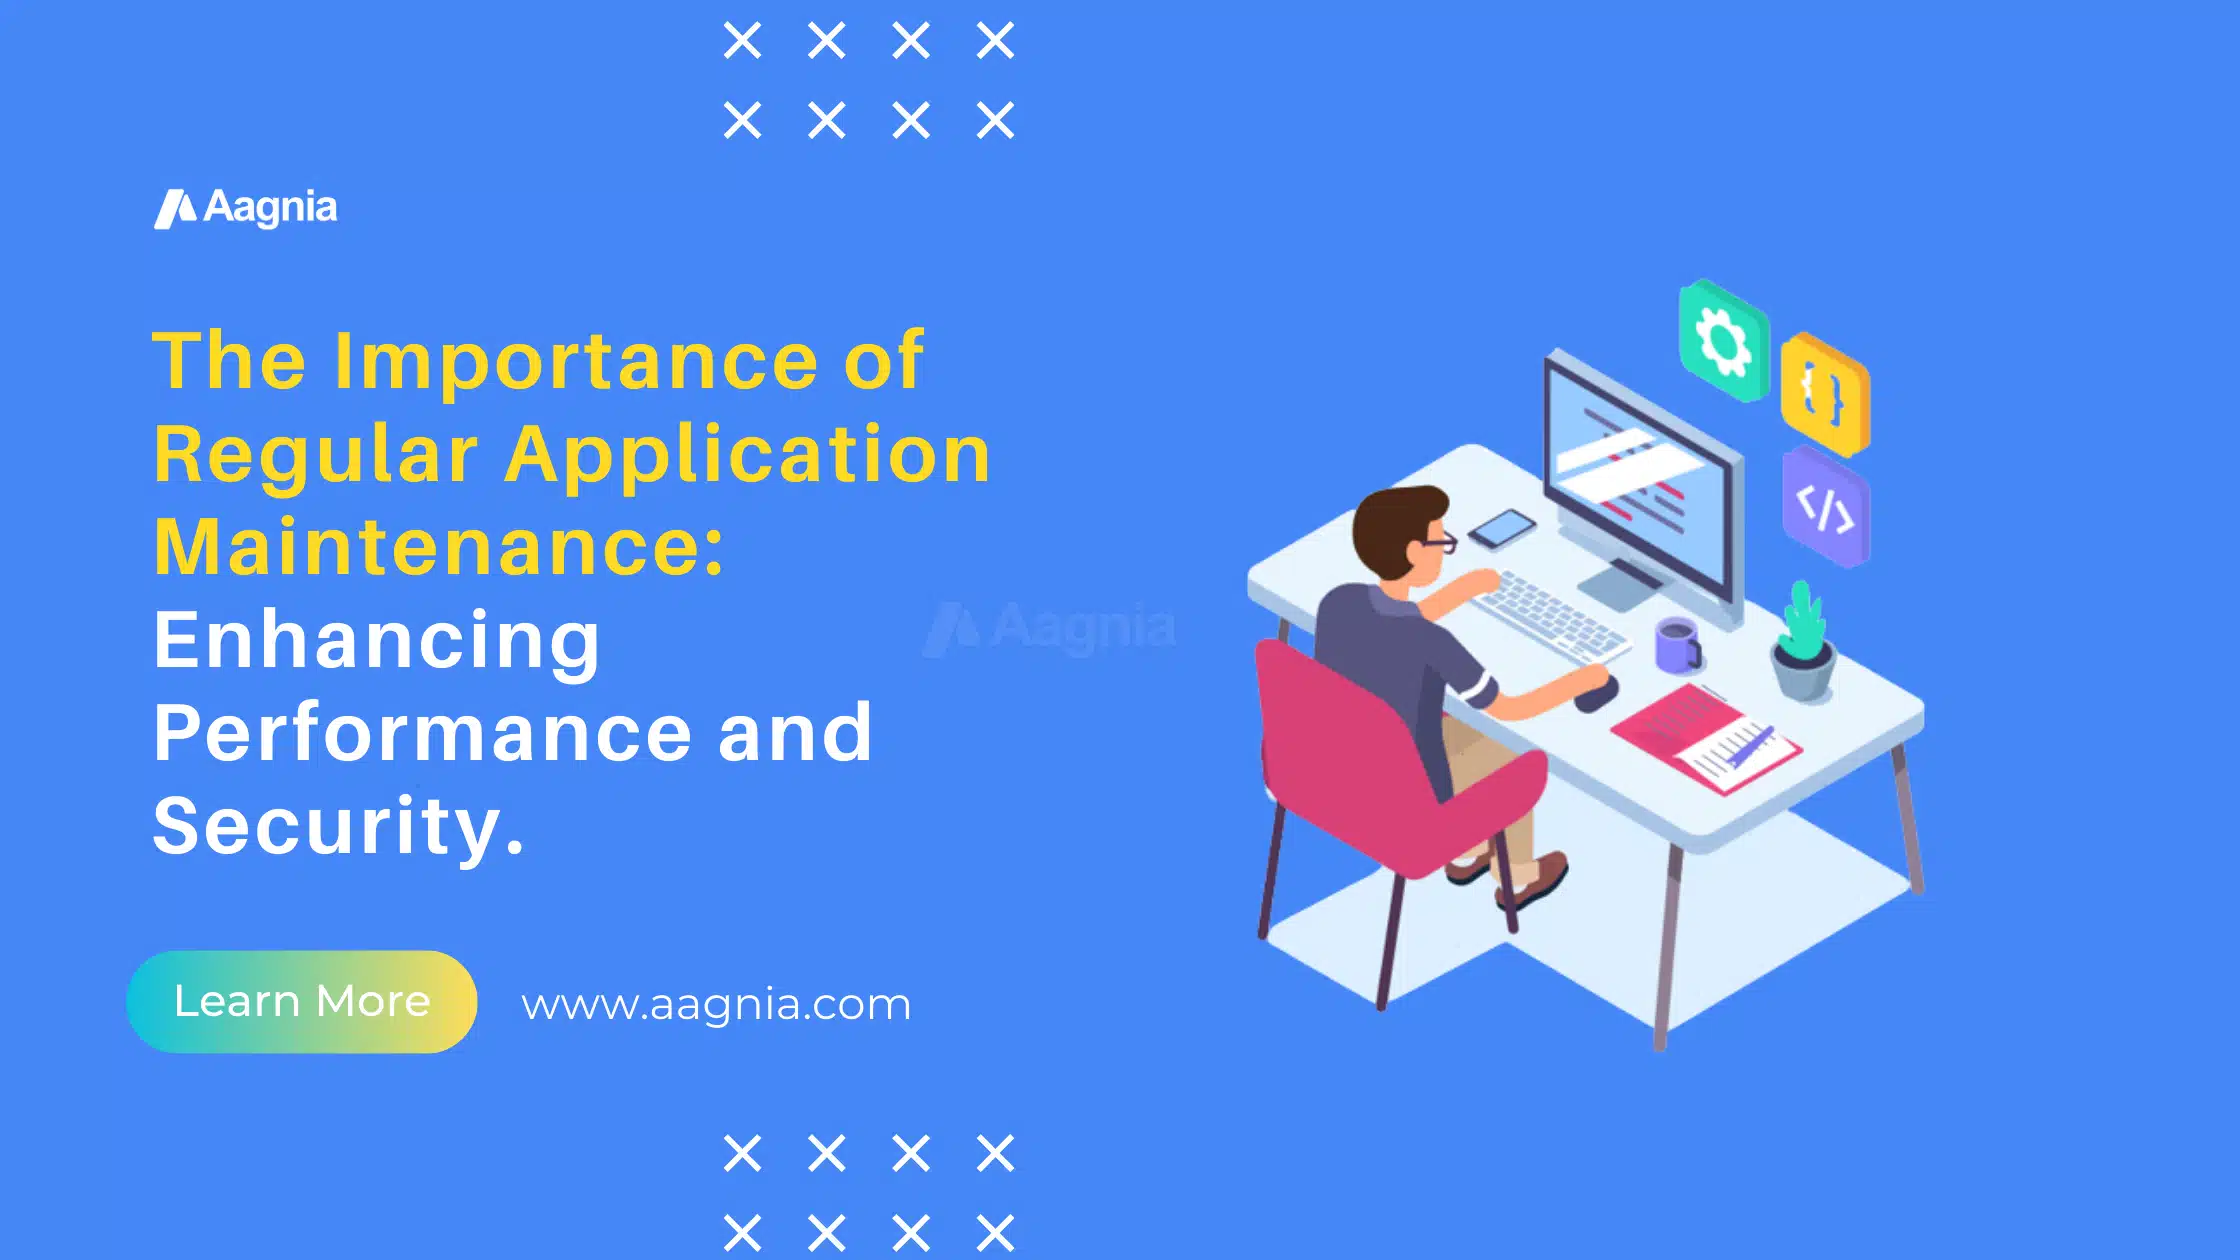  The Importance of Regular Application Maintenance